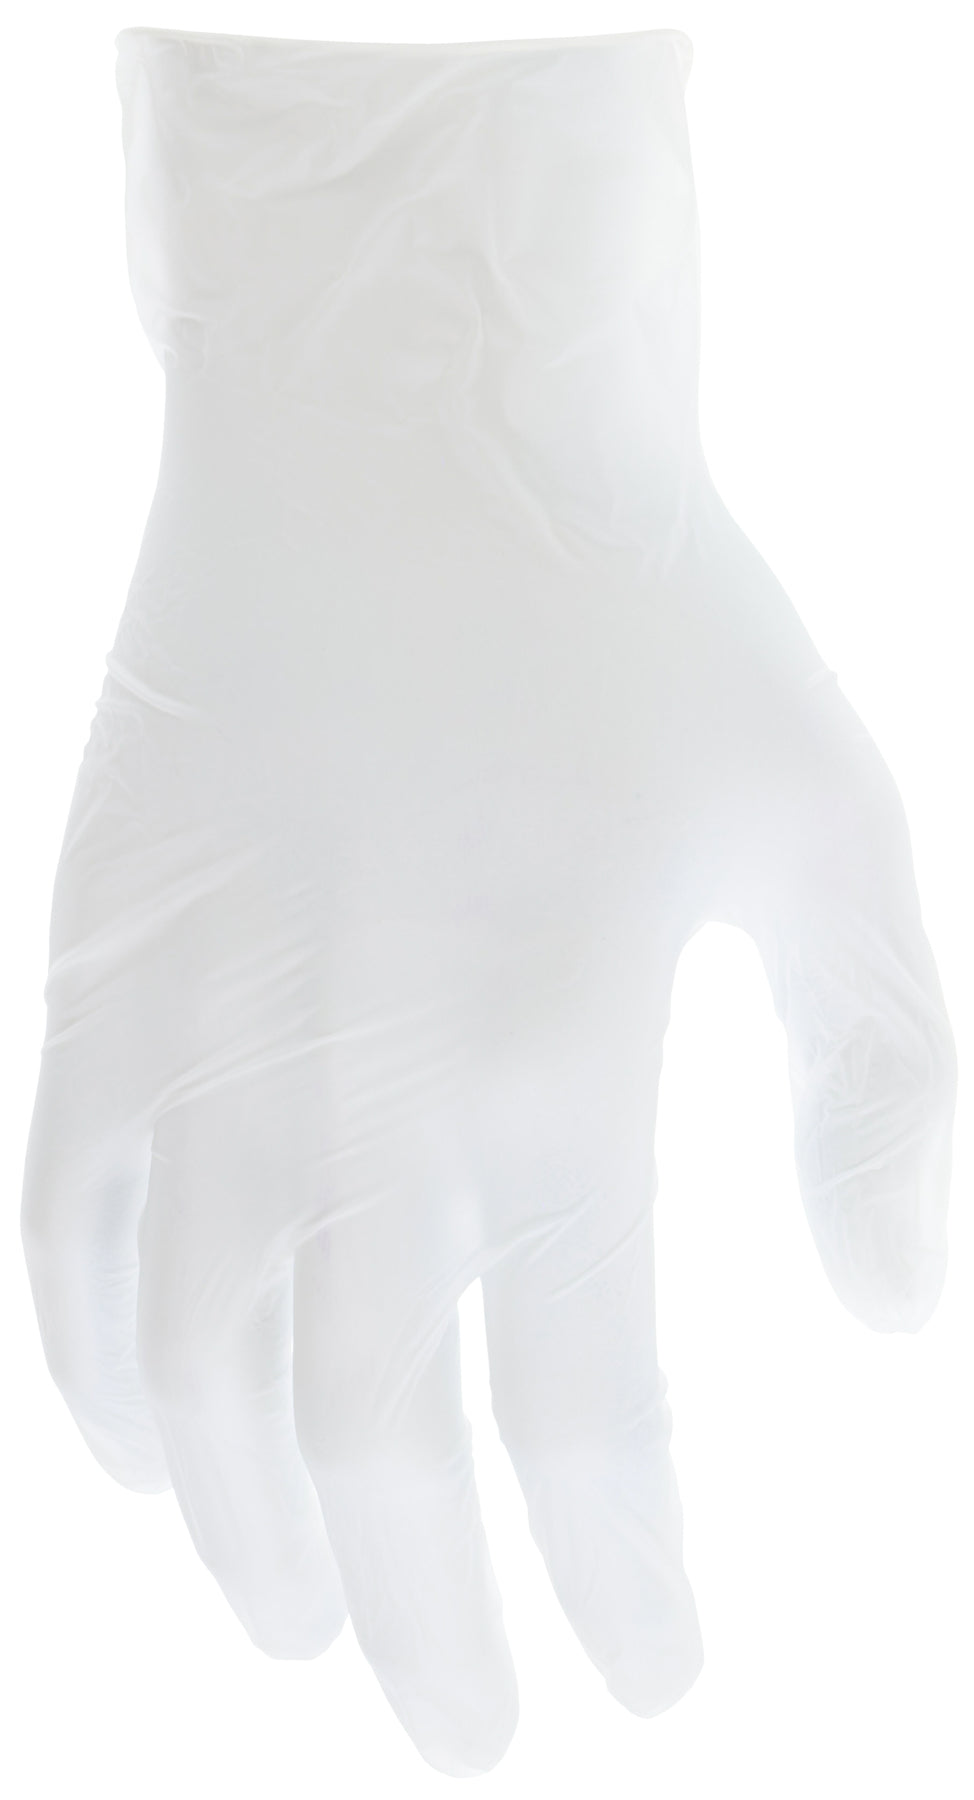 5010 - 5 Mil SensaTouch™ Disposable Vinyl Exam Gloves